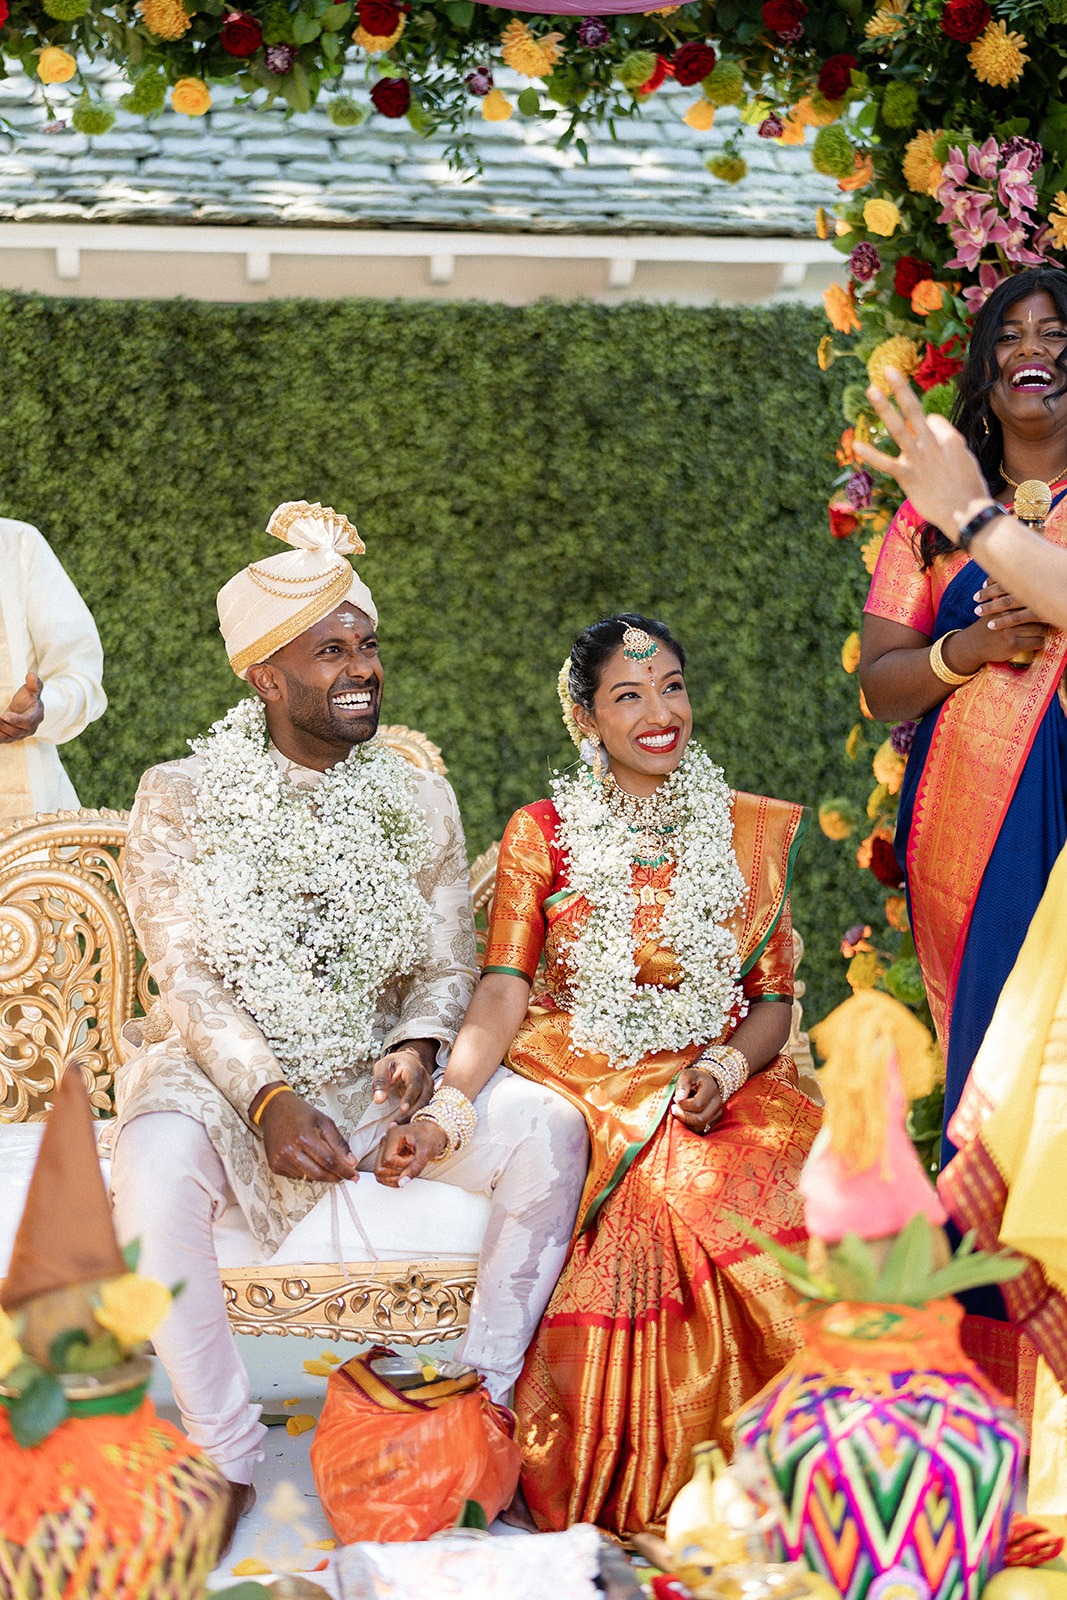 Sri Lankan wedding traditions